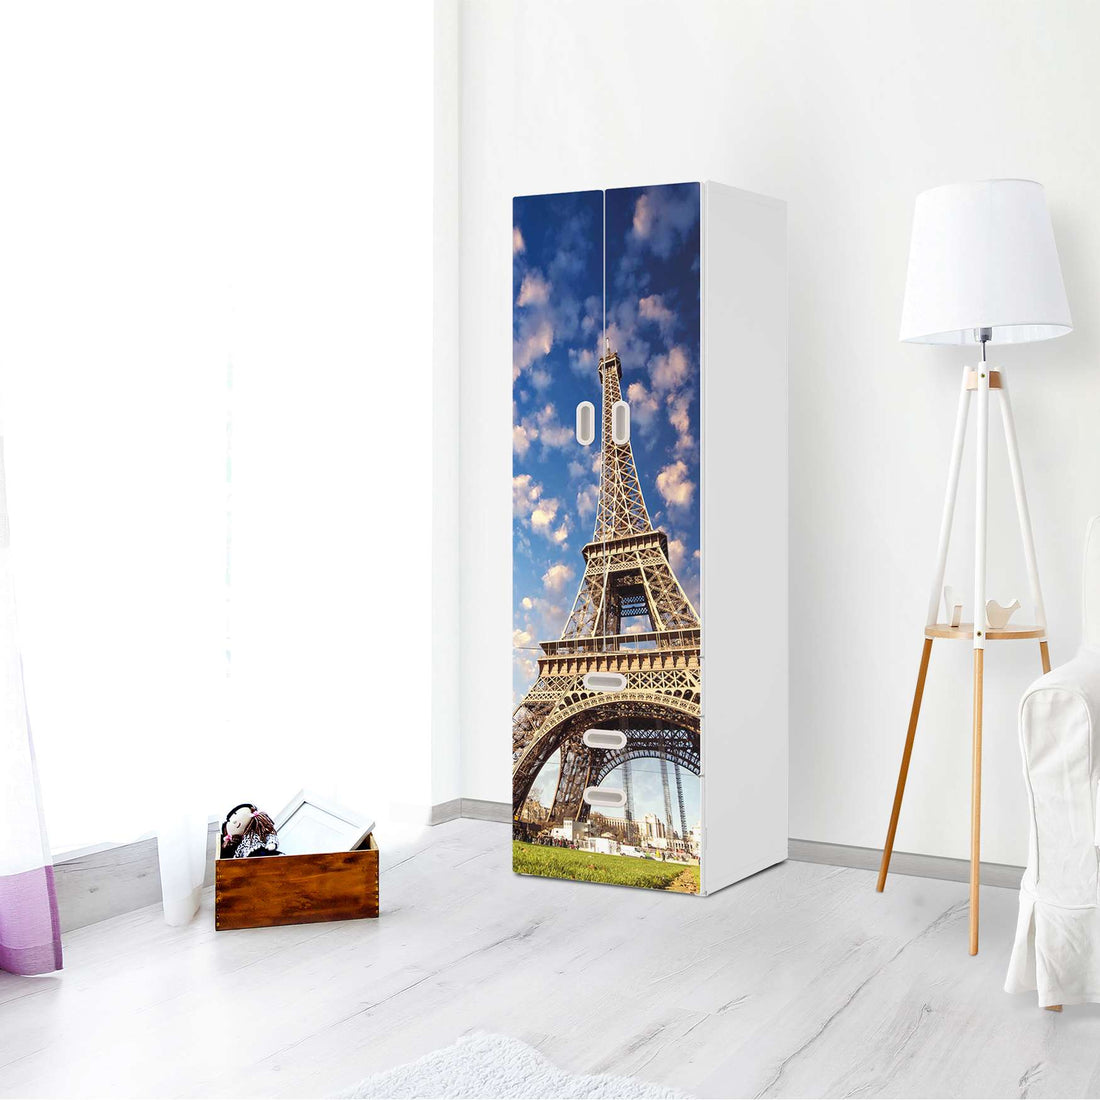 Klebefolie La Tour Eiffel - IKEA Stuva / Fritids kombiniert - 3 Schubladen und 2 große Türen - Kinderzimmer